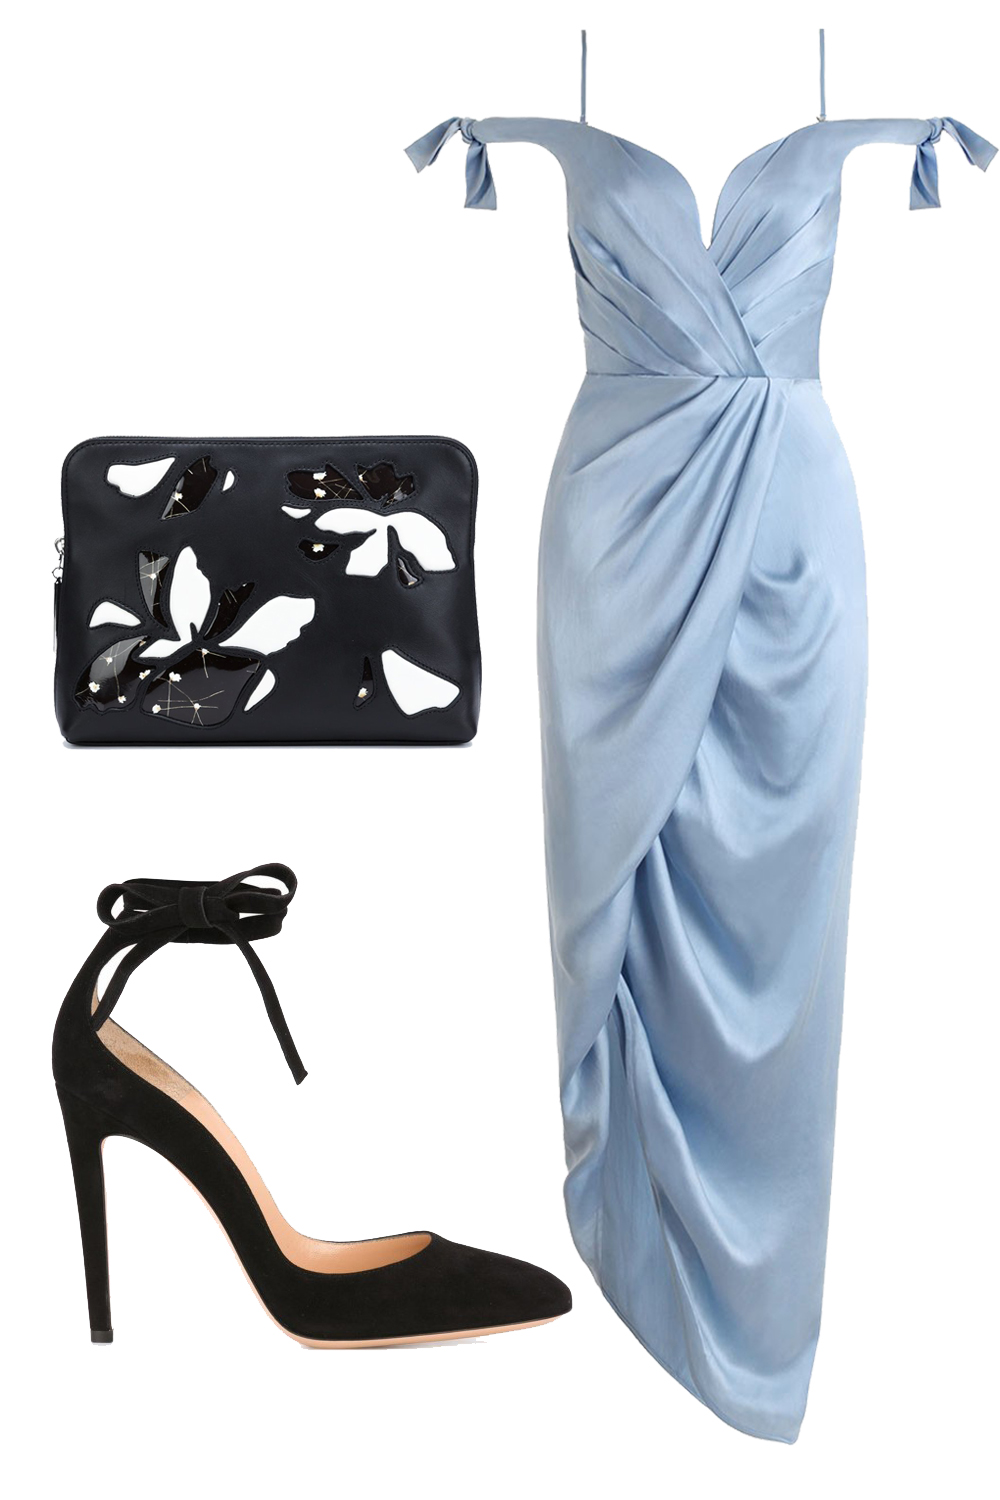 light blue dress with black shoes